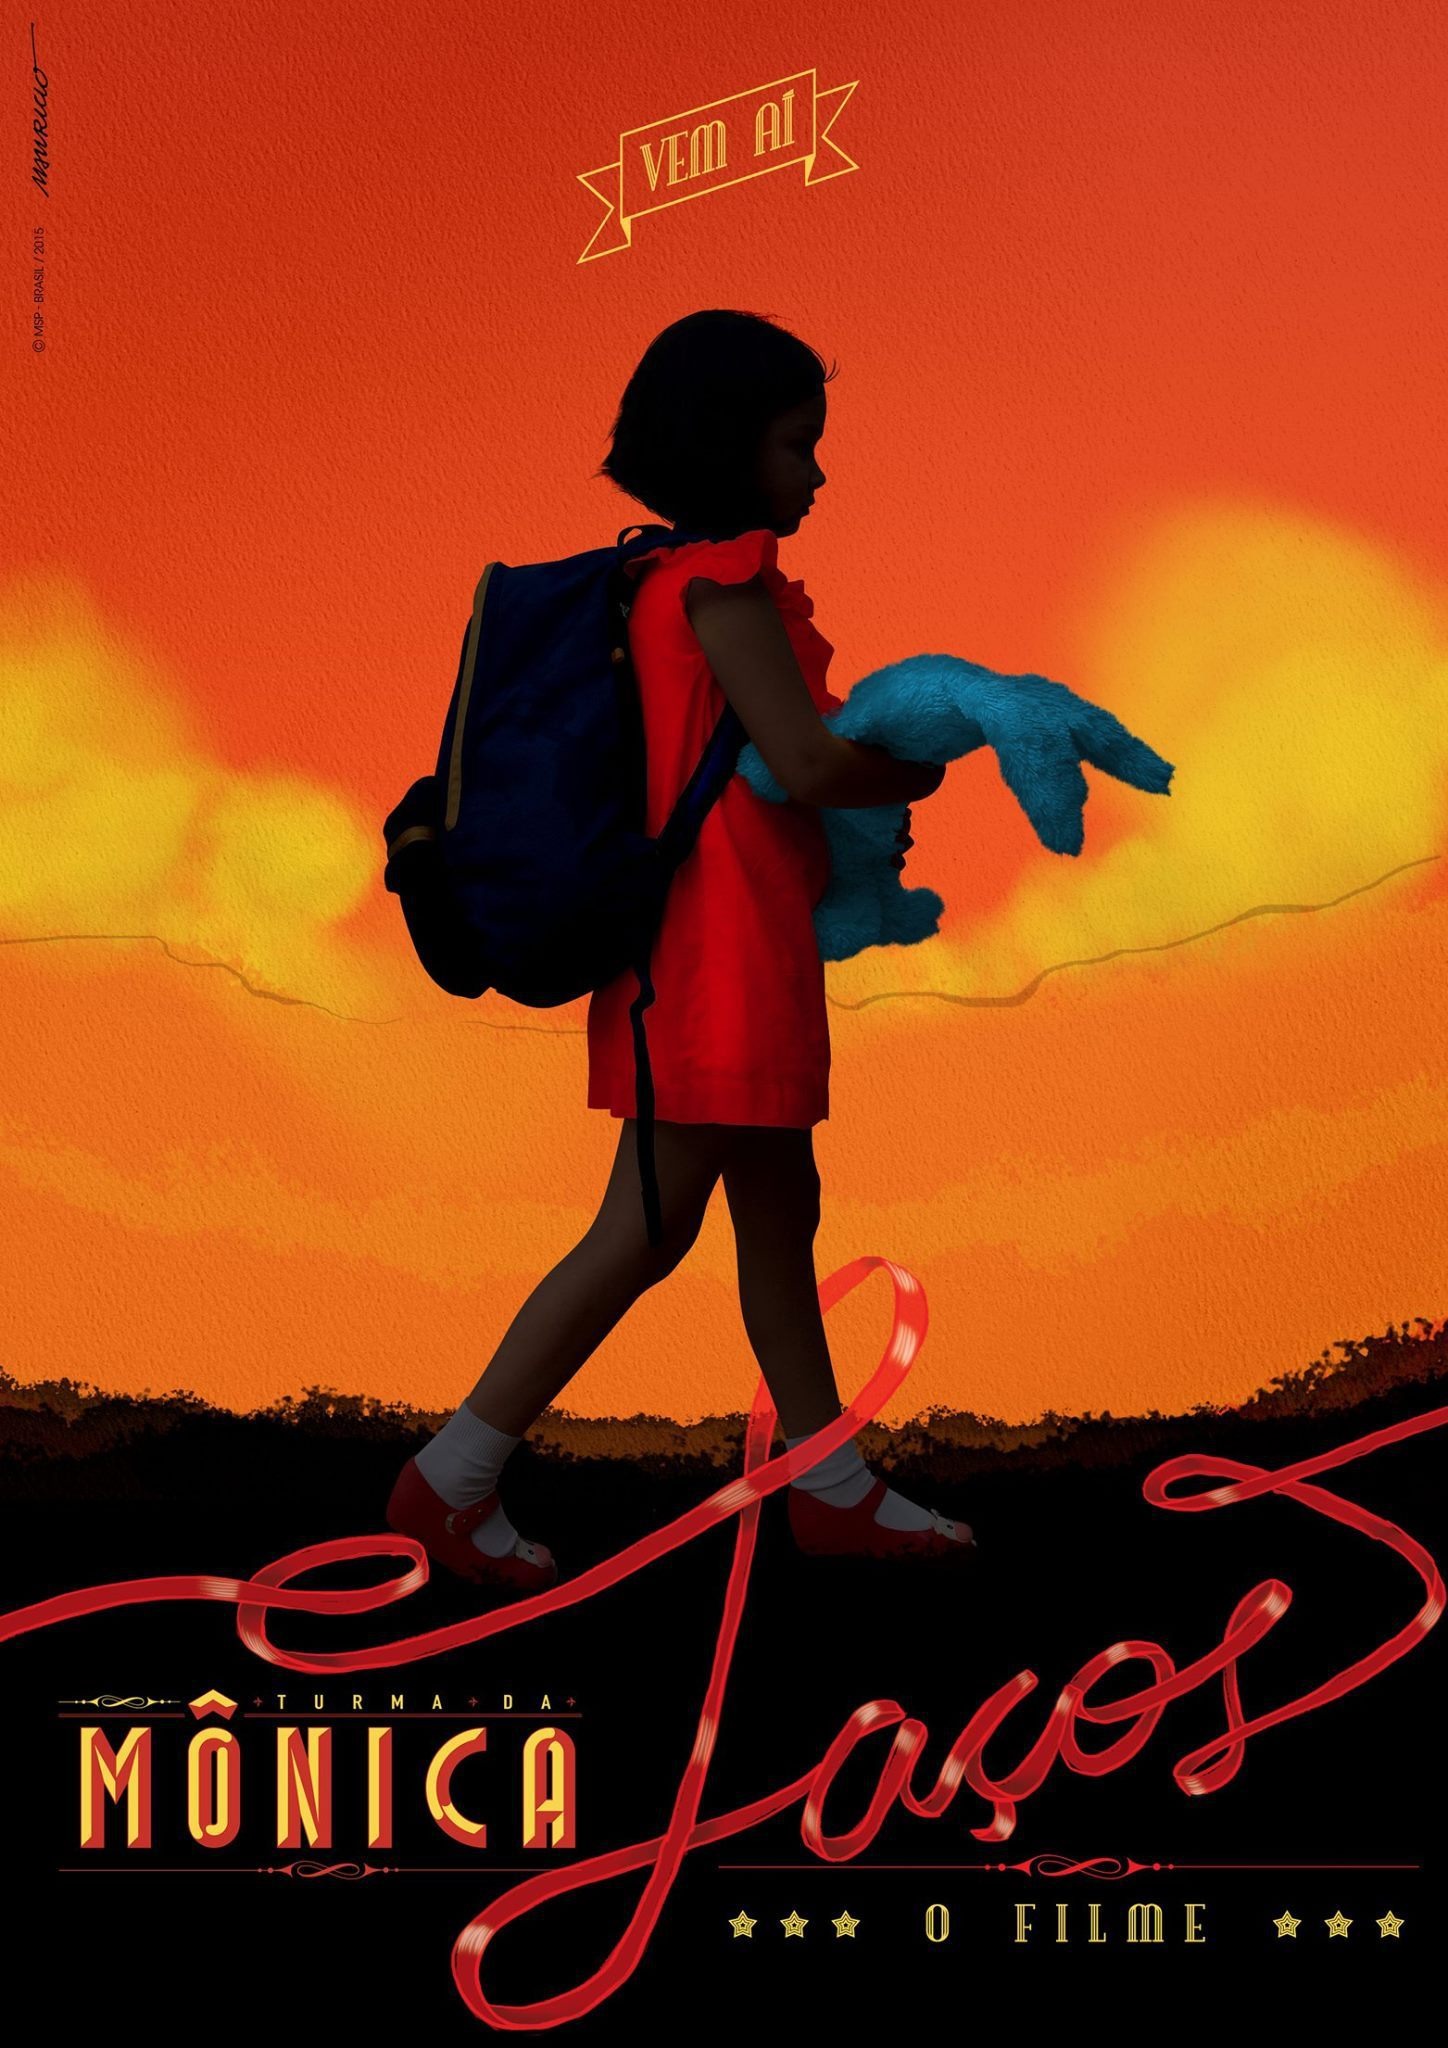 Mega Sized Movie Poster Image for Turma da Mônica: Laços (#1 of 2)